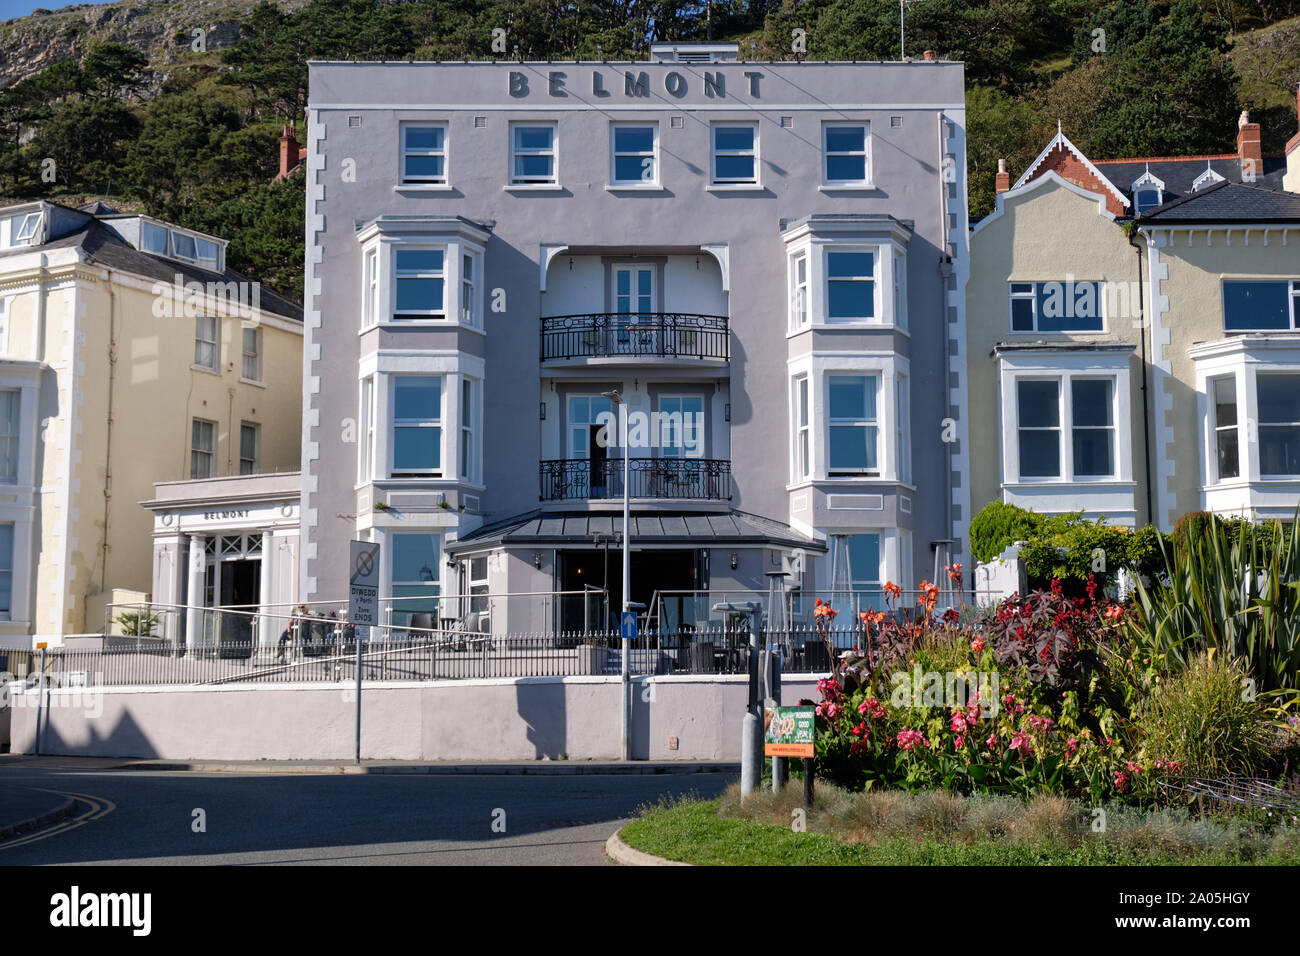 The Belmont Hotel on the esplanade in Llandudno, Wales Stock Photo